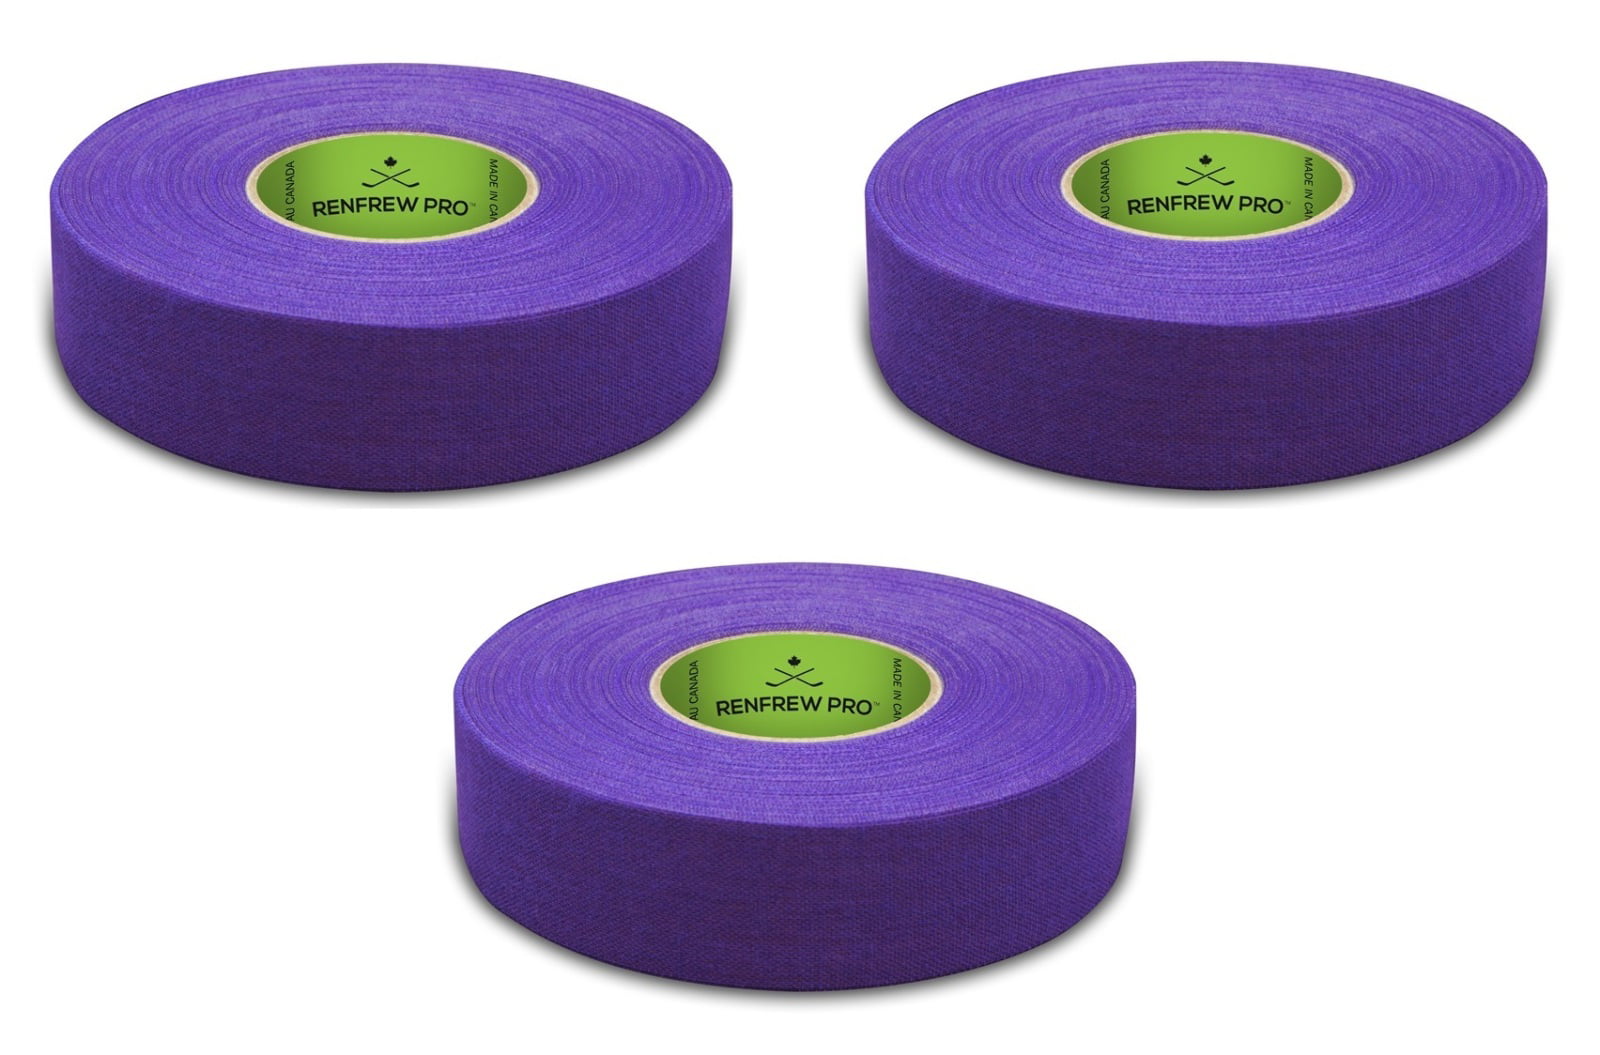 Sportstape 24mm Black Ice Hockey Cloth Stick Tape Roller Grip Wrap